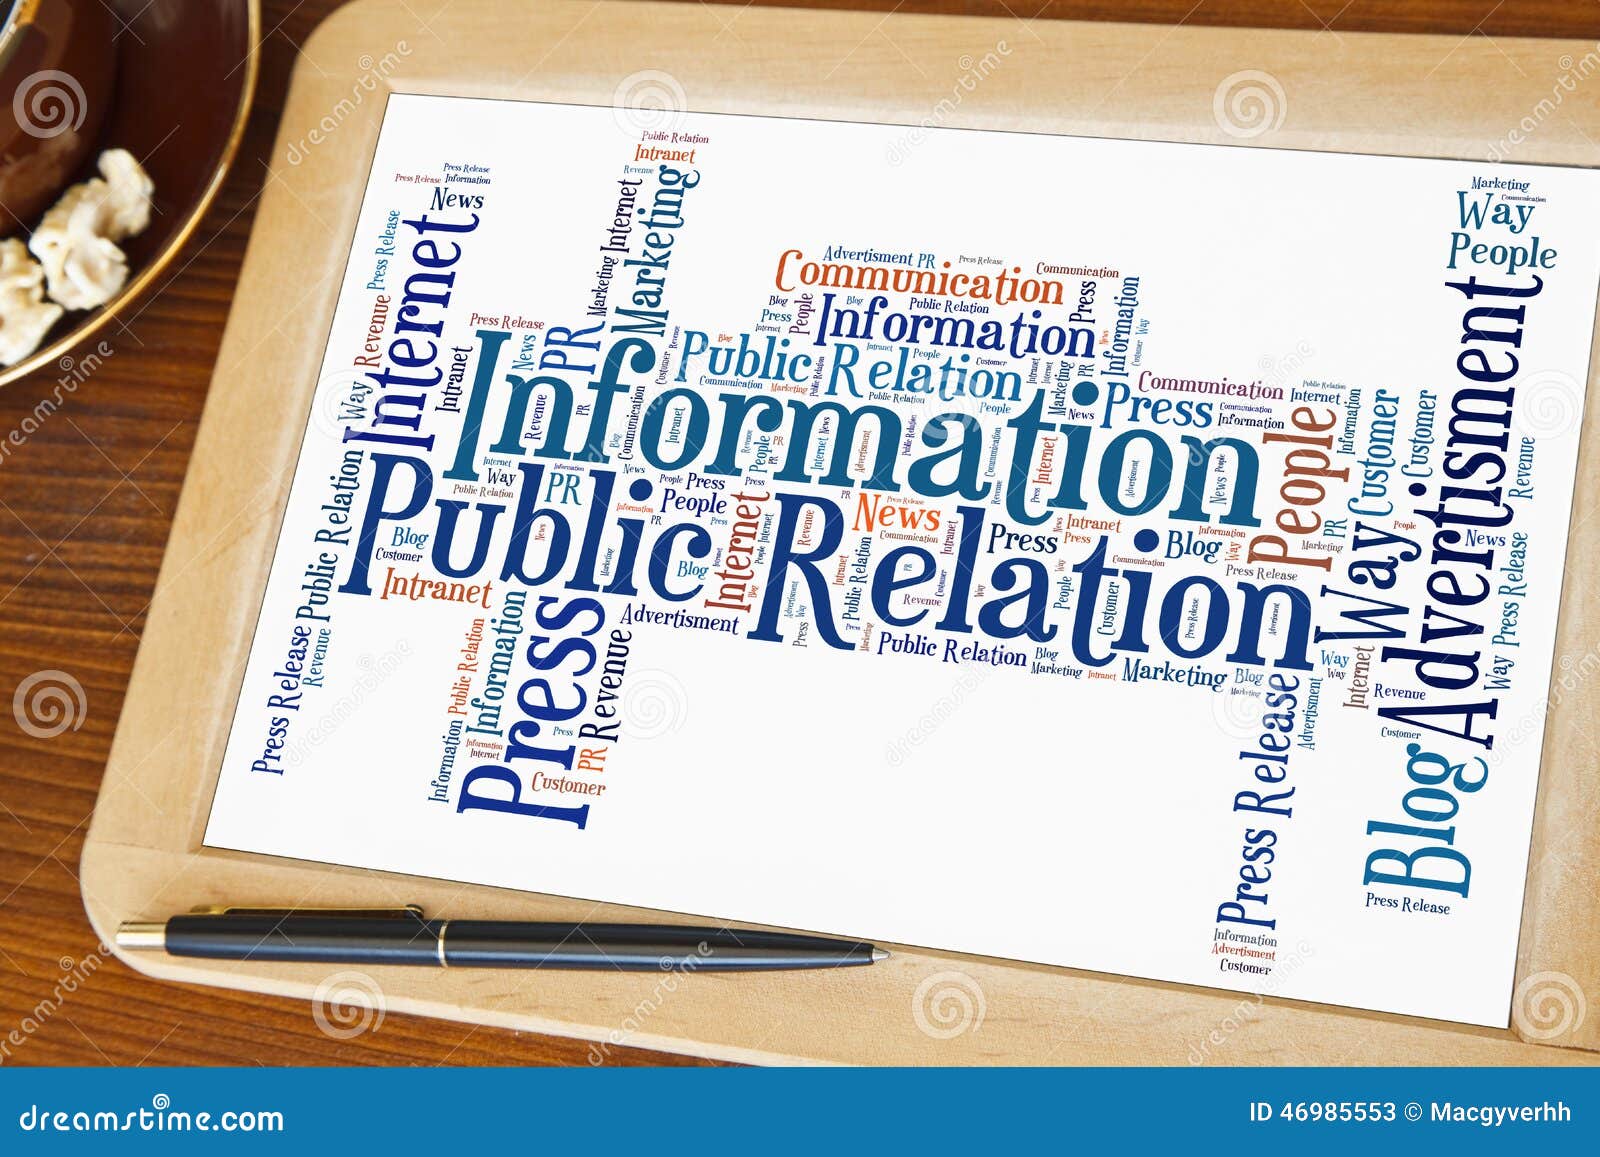 public relation word cloud